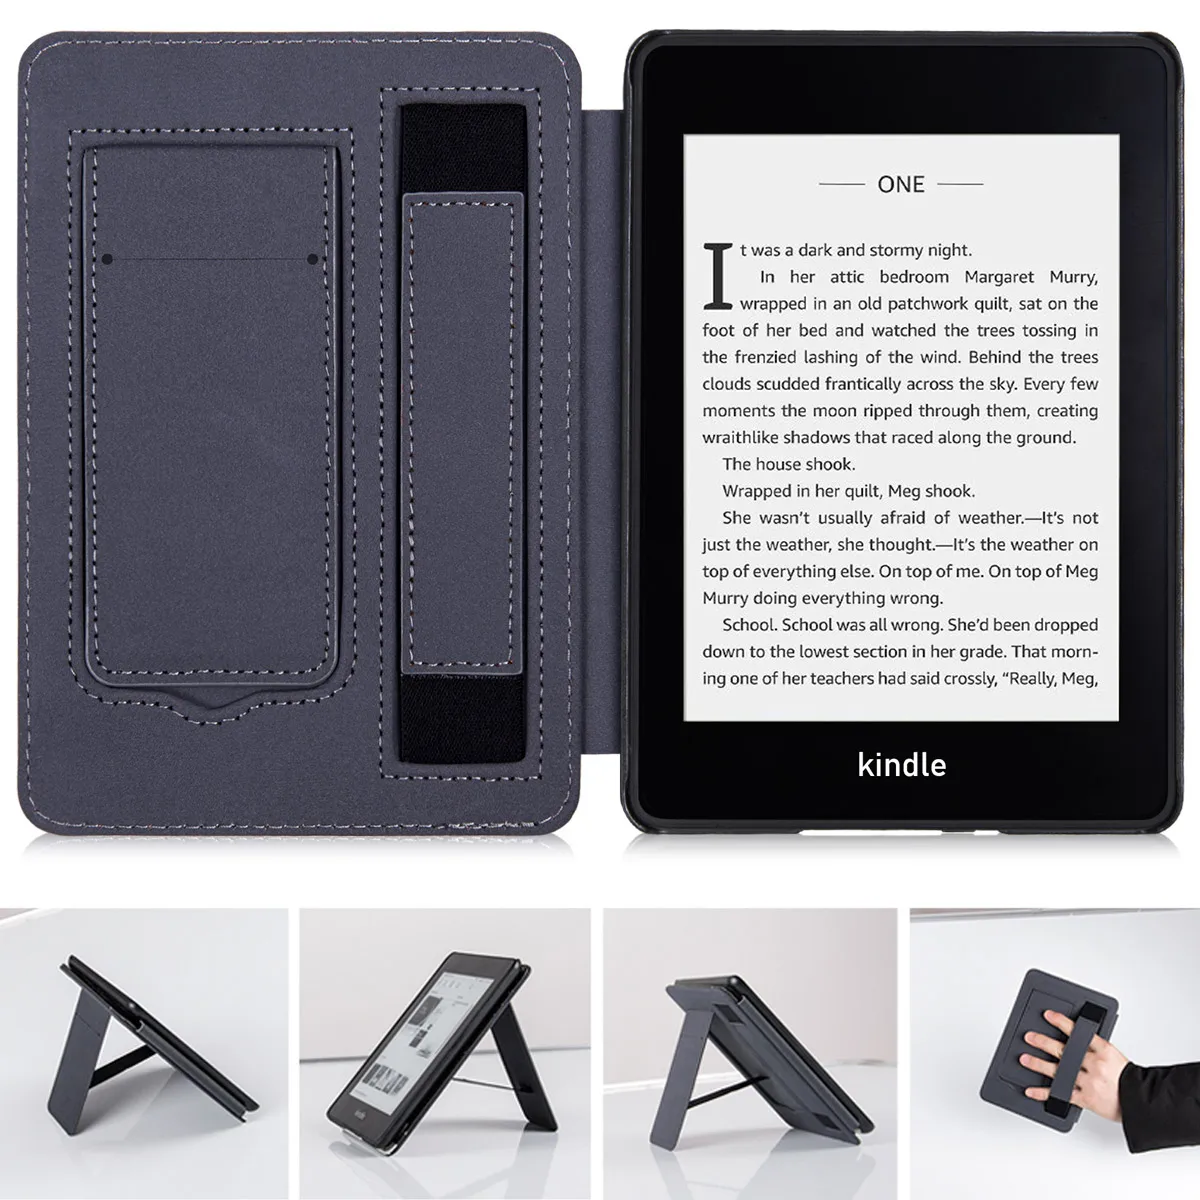 BOZHUORUI Stojalo velja za Vse nove Kindle Paperwhite 10. generacije 2018 (Model PQ94WIF) - PU Usnje Smart Cover s Strani Traku